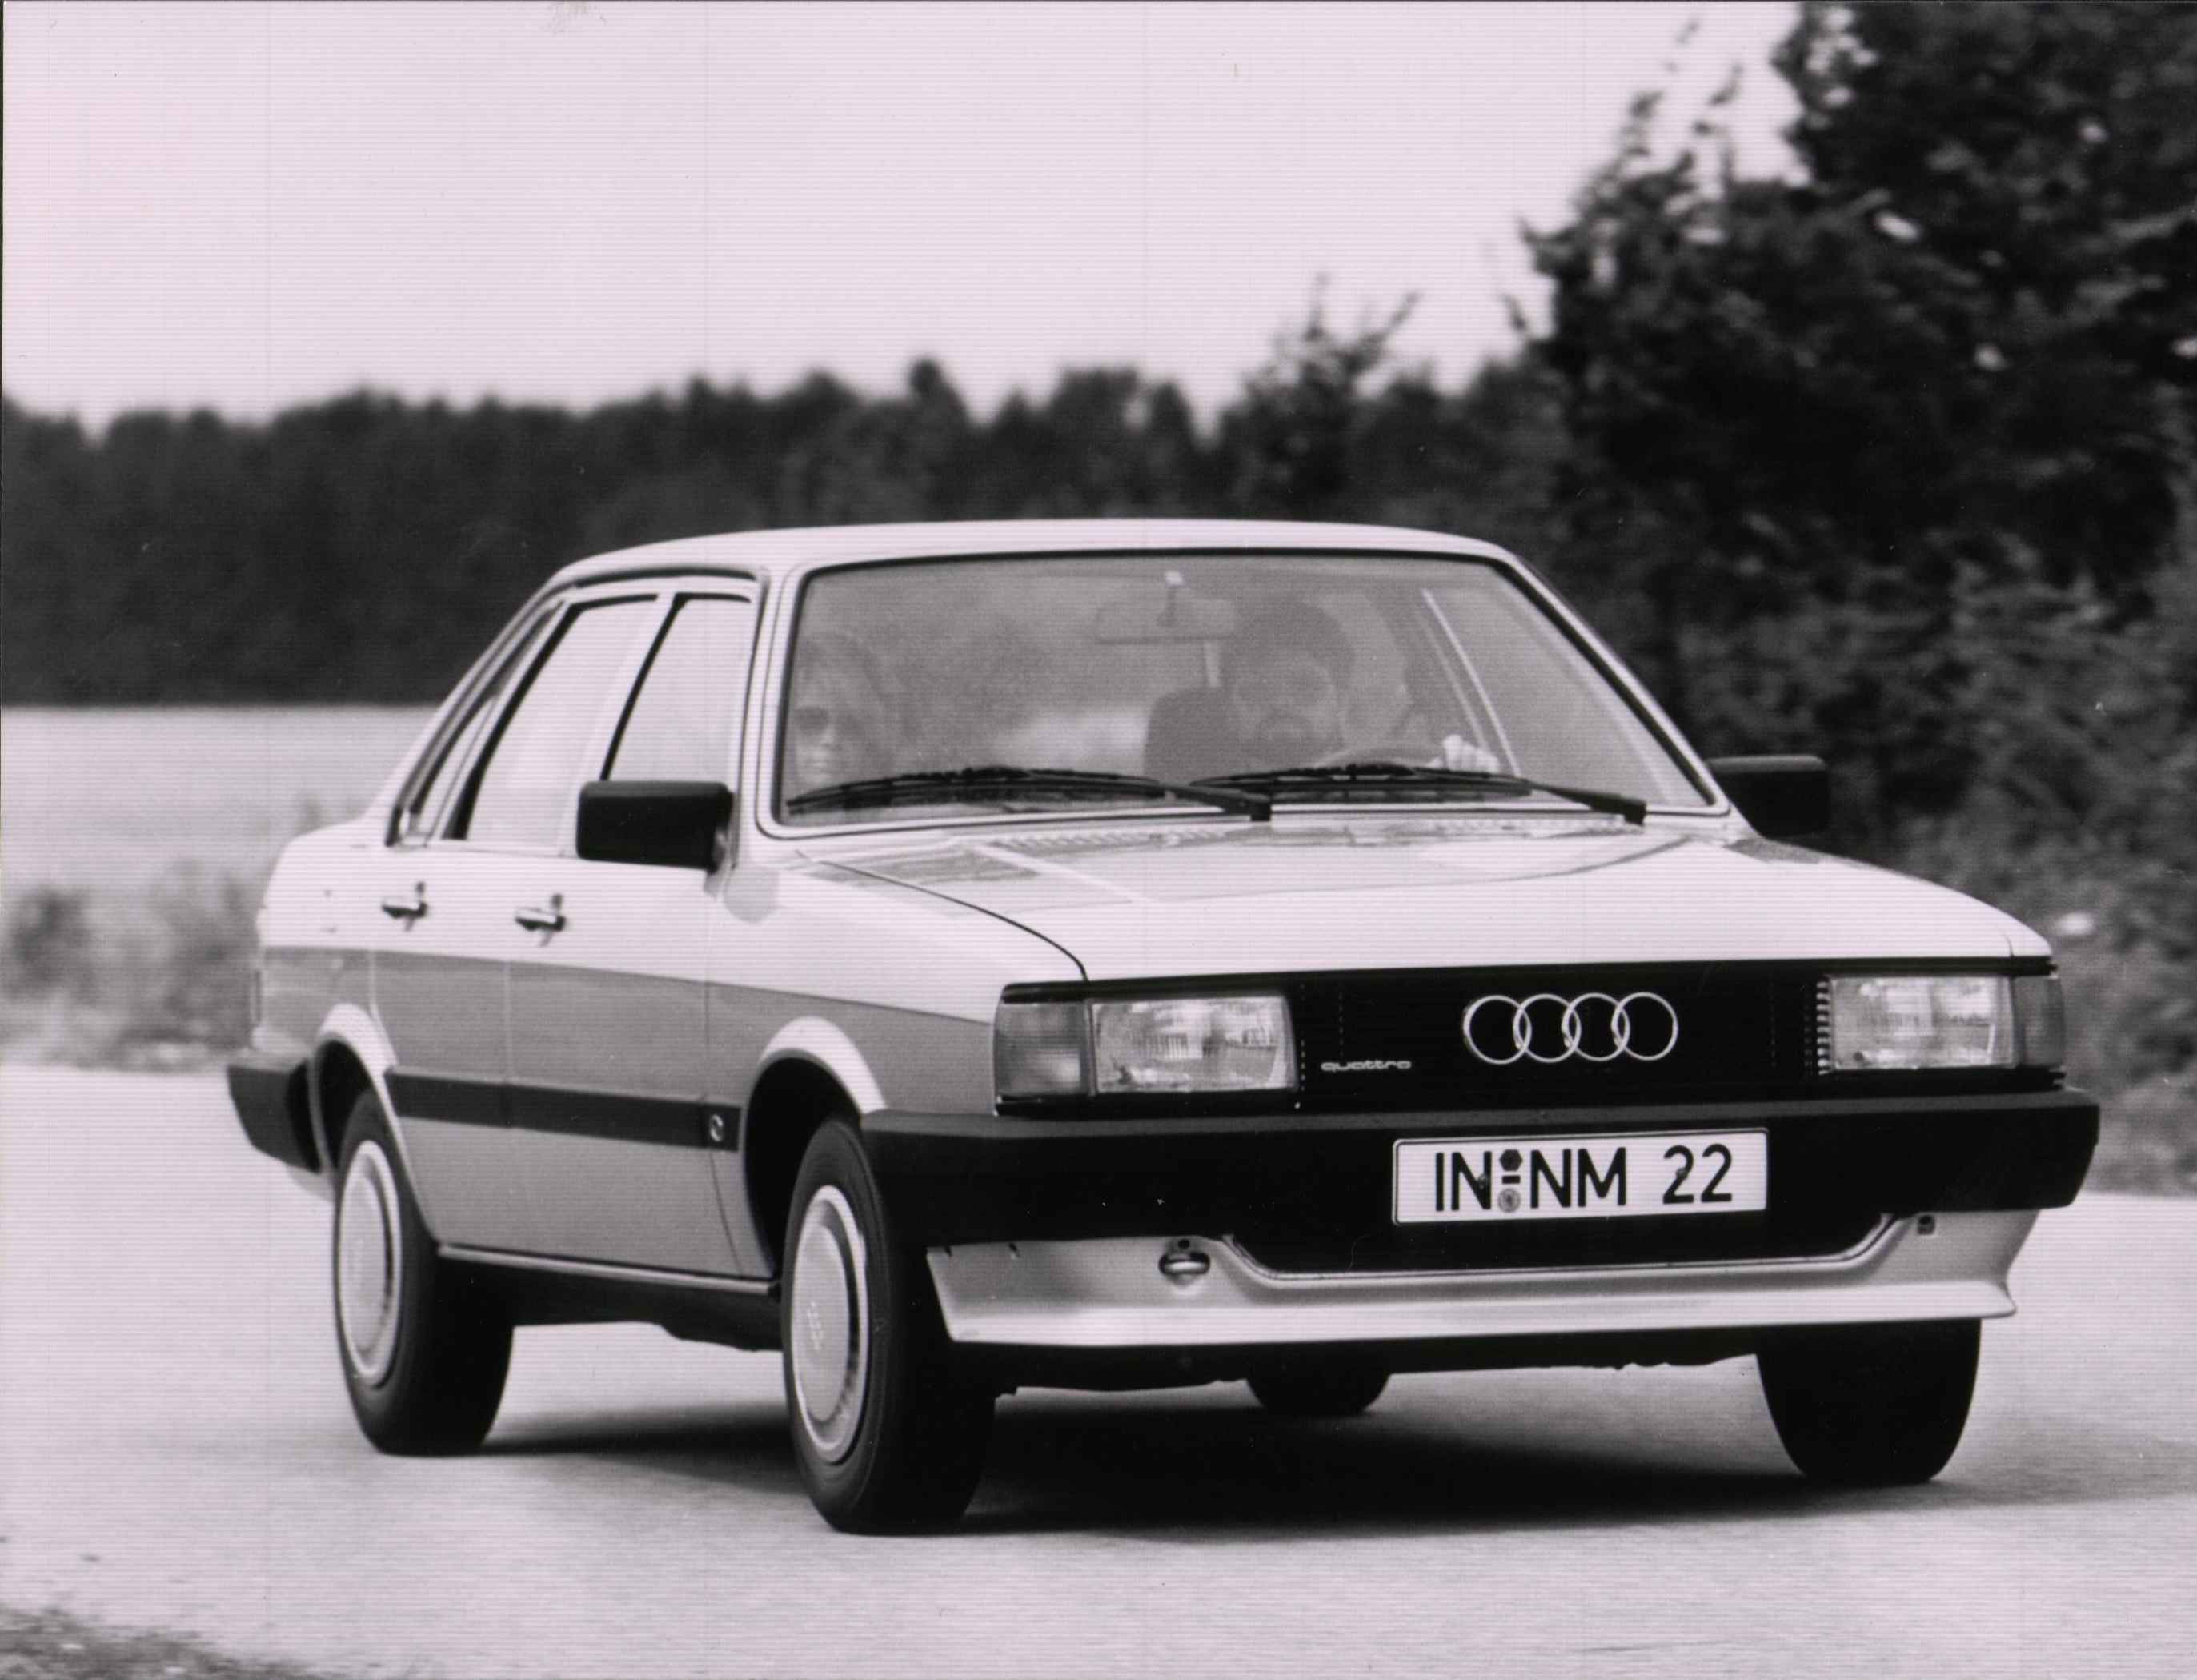 Ауди первого поколения. Ауди 80 в2. Audi 80 b2. Ауди 80 кватро. Ауди 90 кватро Ауди 80.